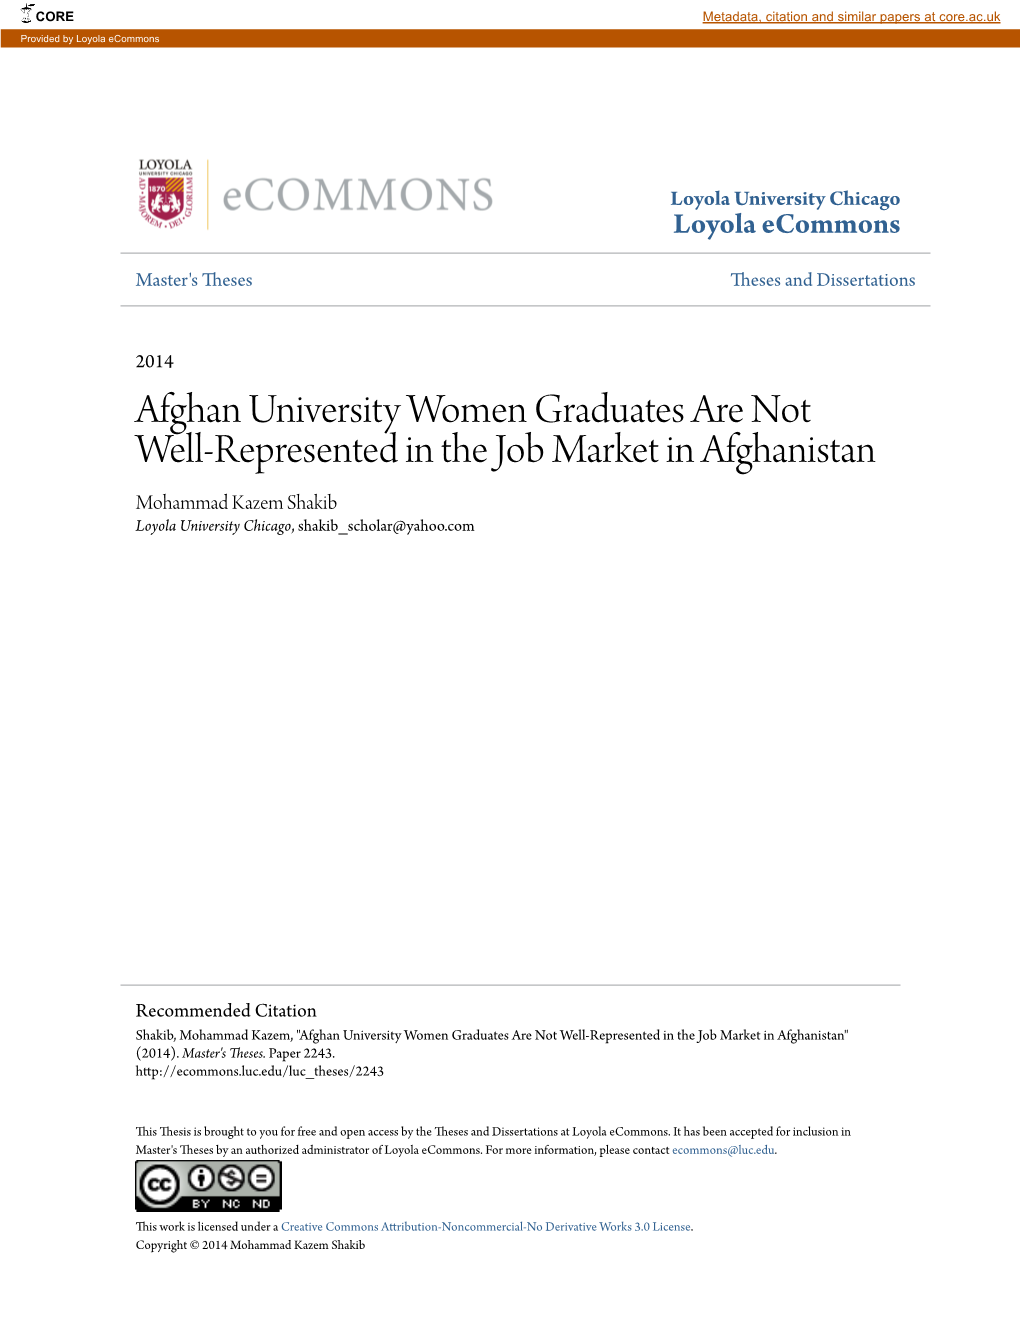 Afghan University Women Graduates Are Not Well-Represented in the Job Market in Afghanistan Mohammad Kazem Shakib Loyola University Chicago, Shakib Scholar@Yahoo.Com